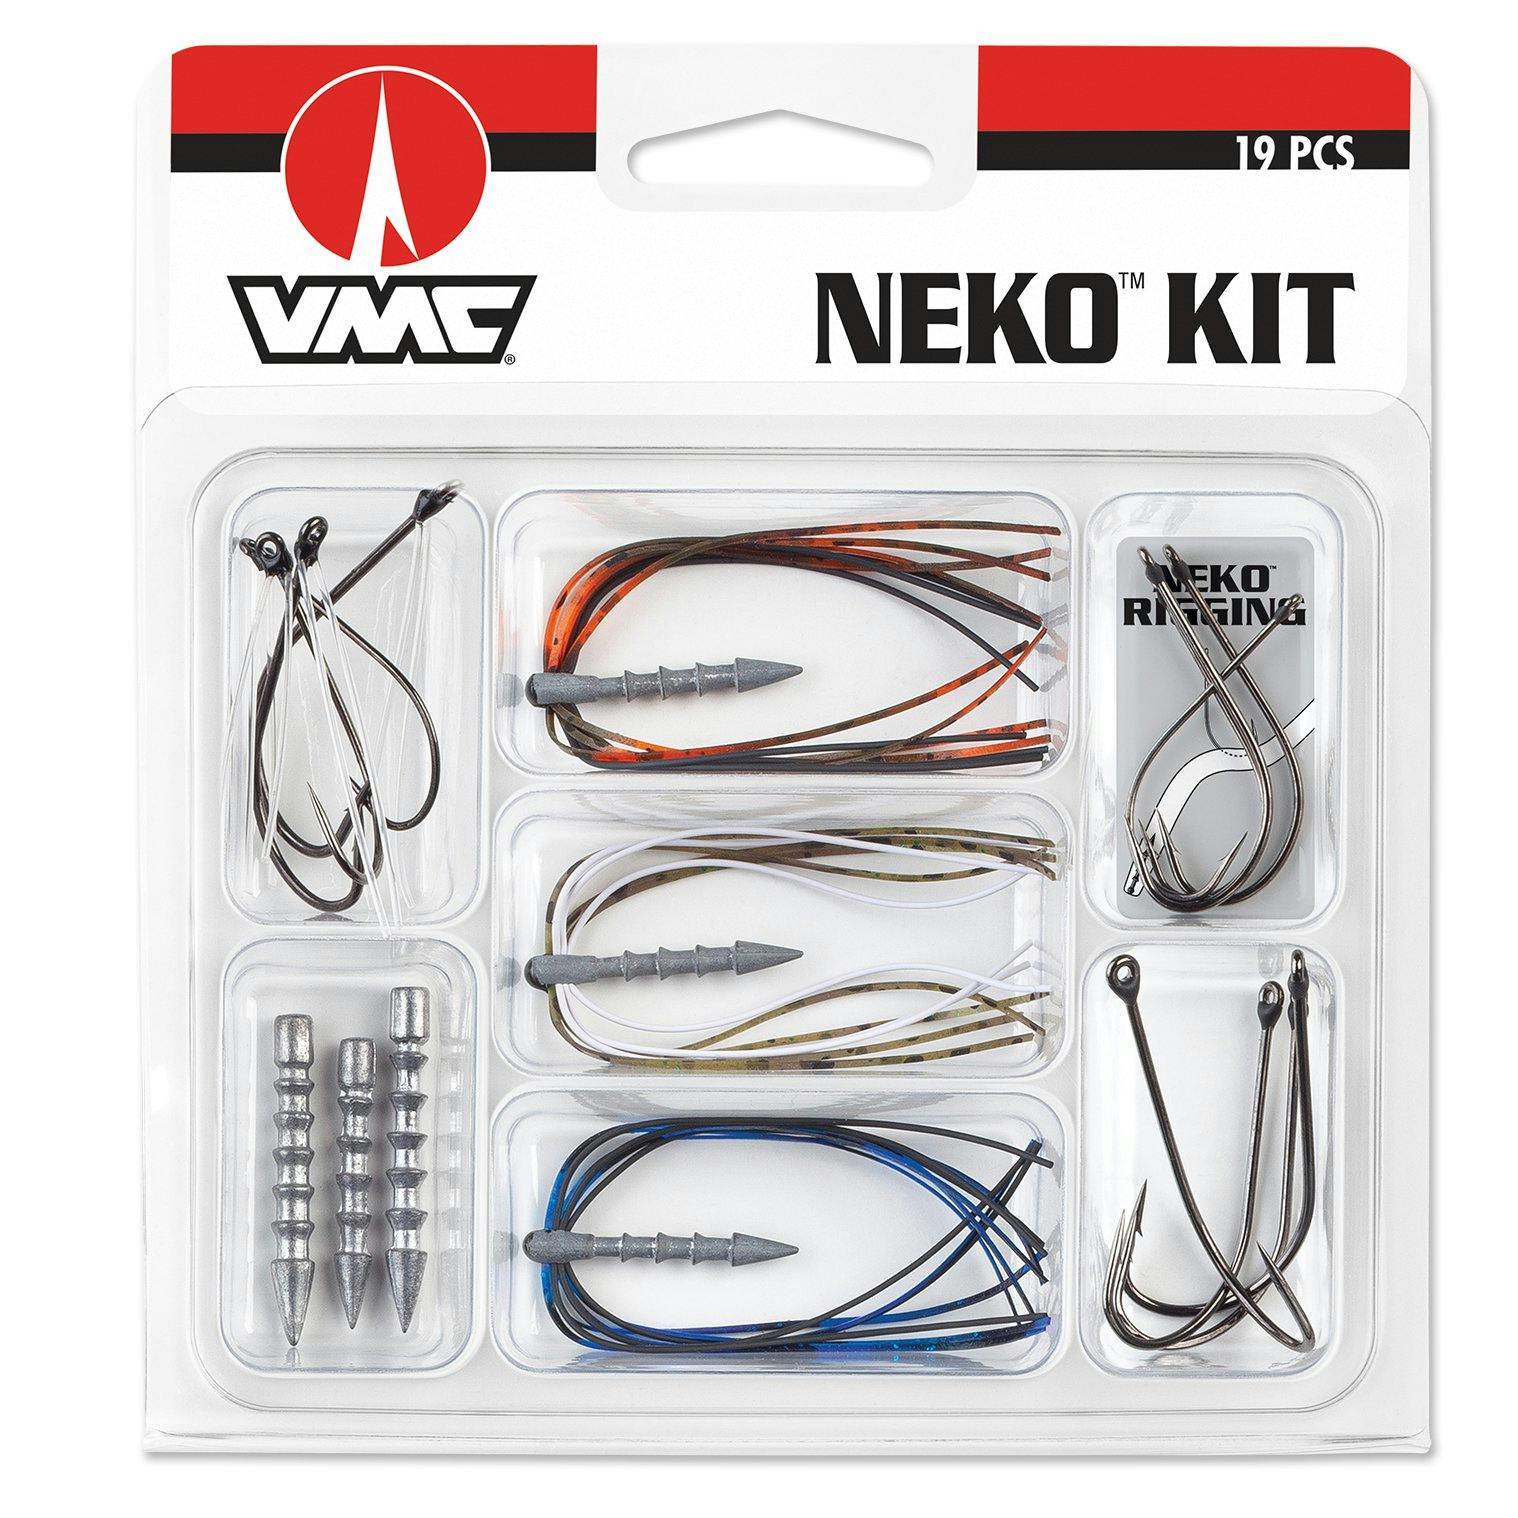 VMC Neko Rigging Kit